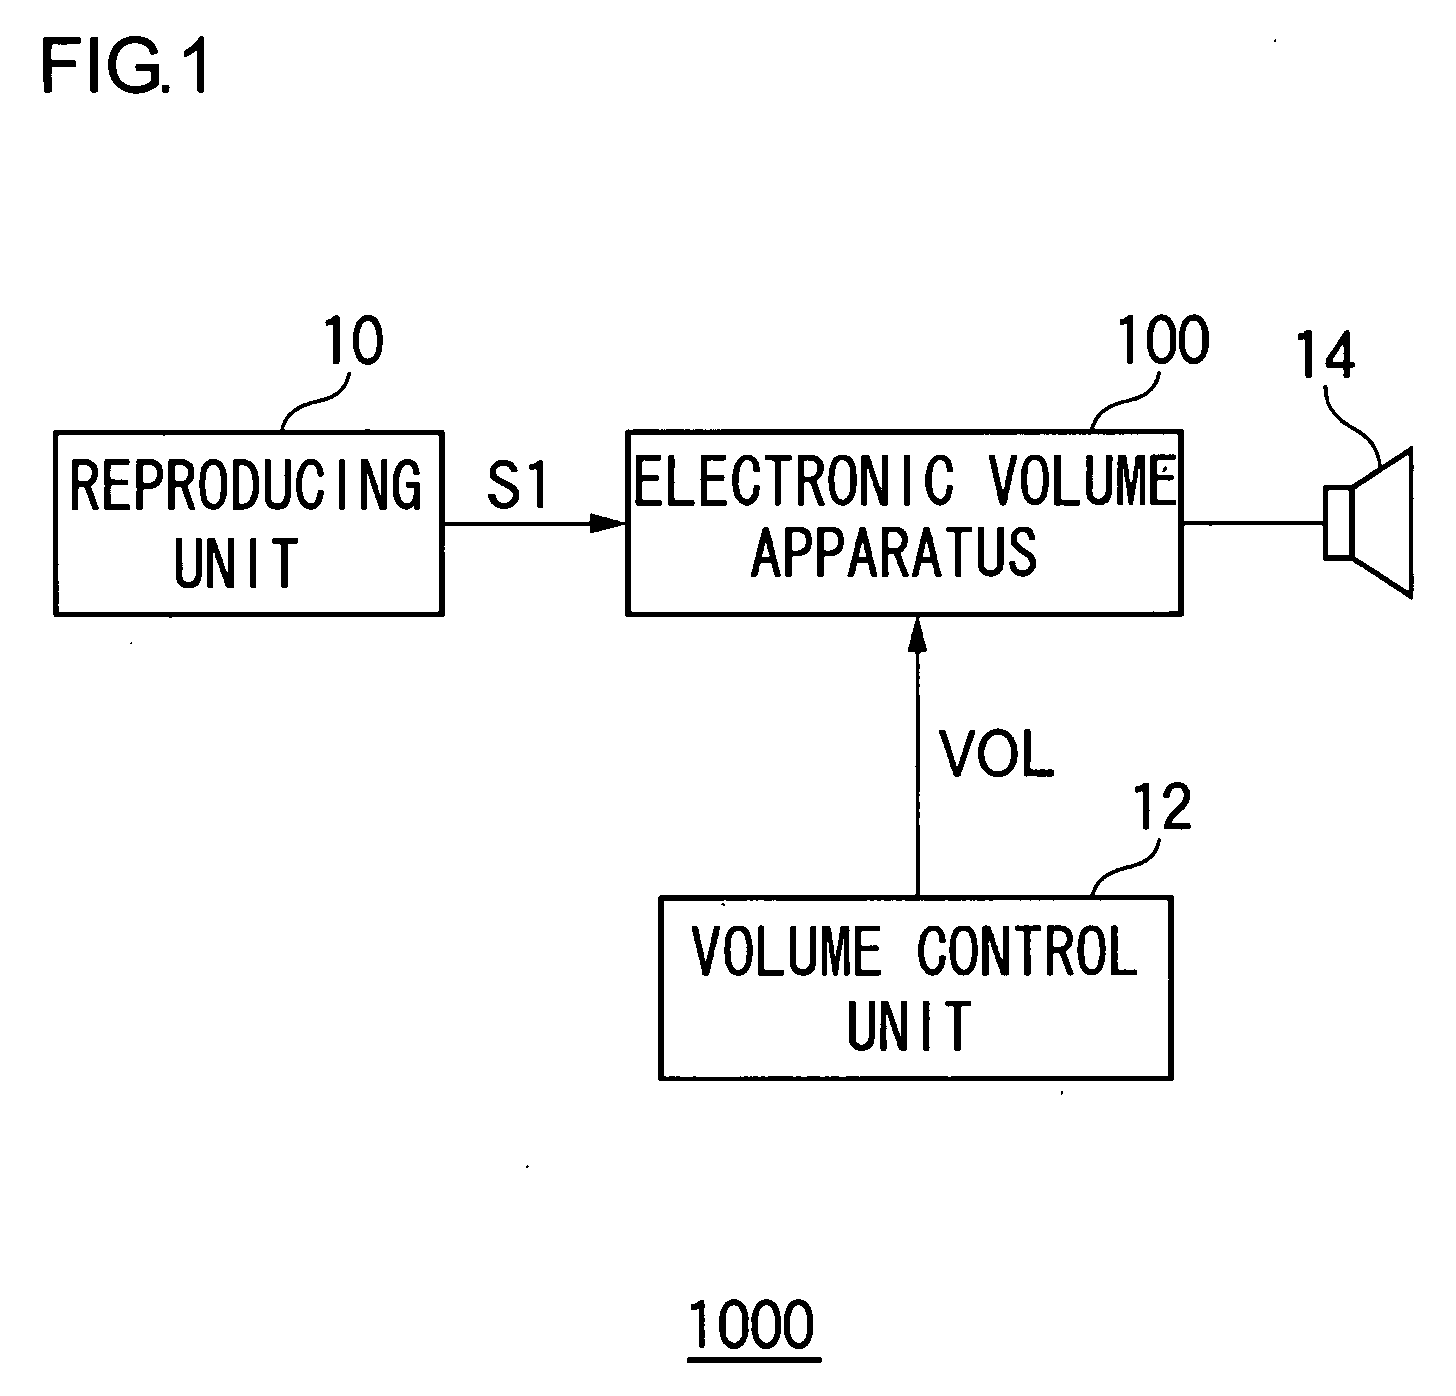 Electronic volume apparatus